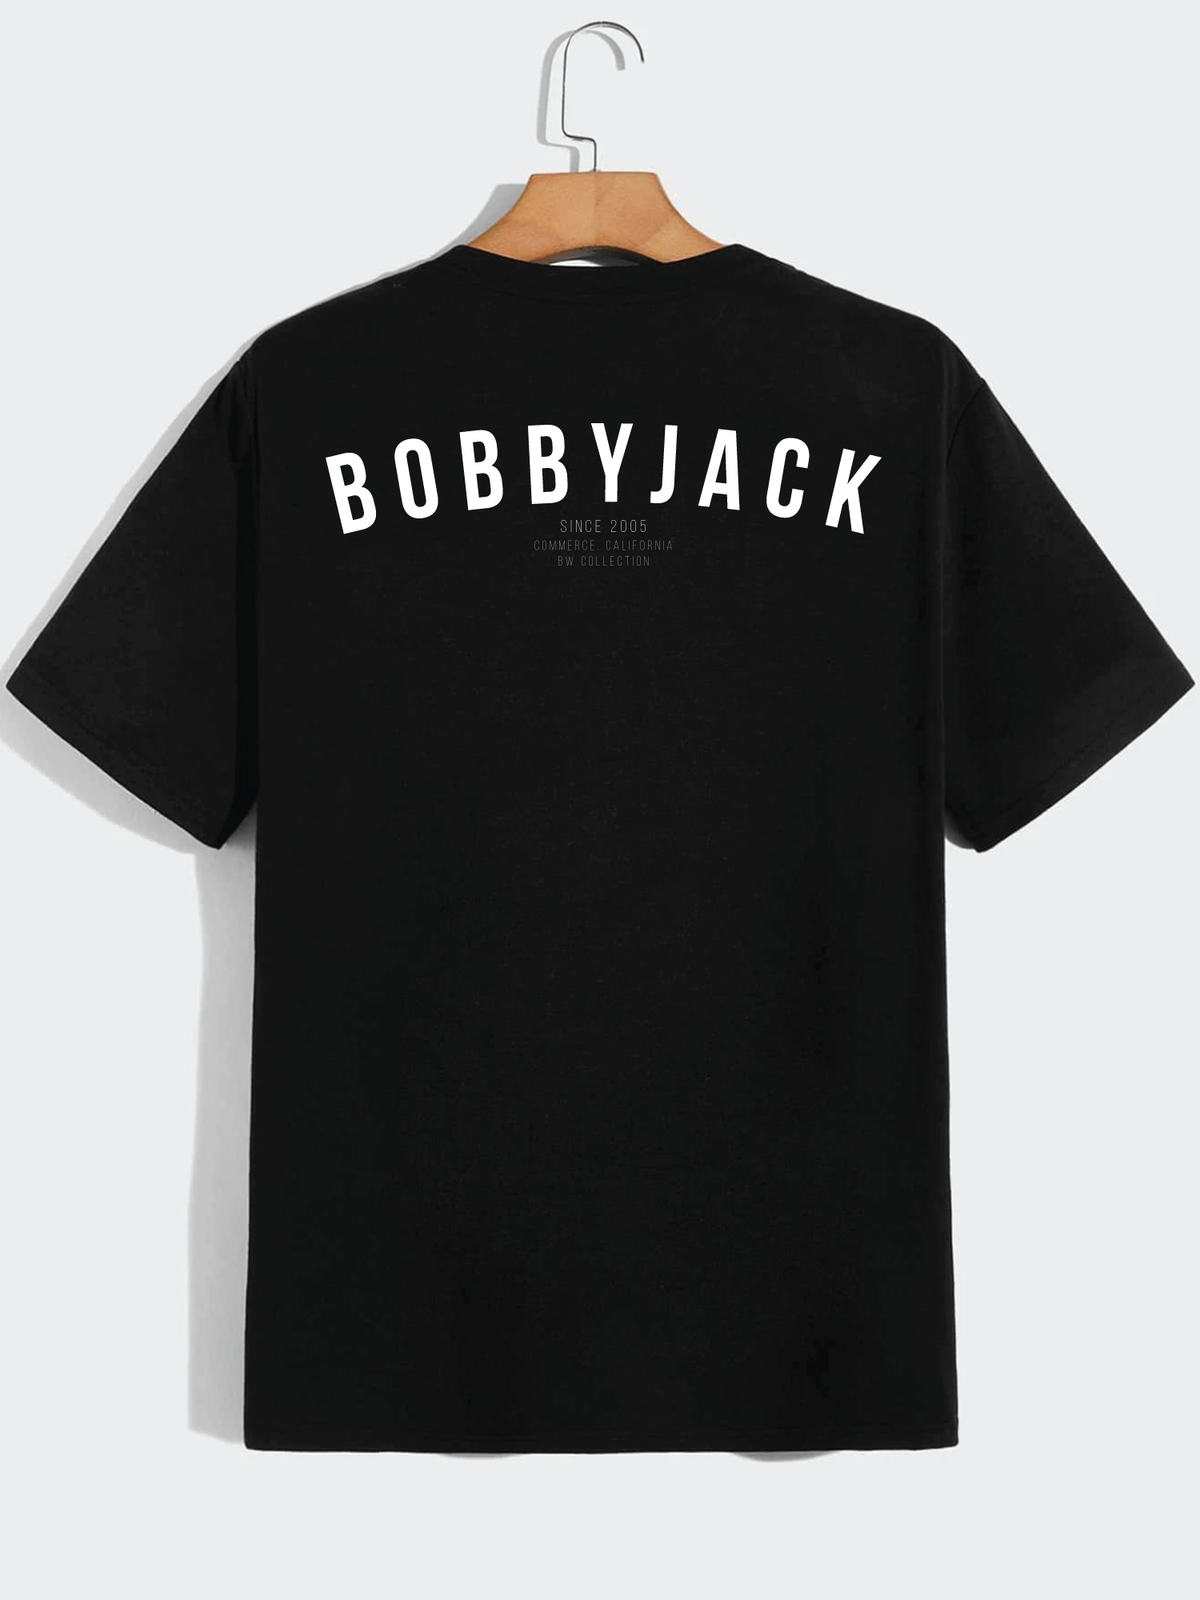 Bobby Head  - Bobby Jack Men HW Shirt - Black